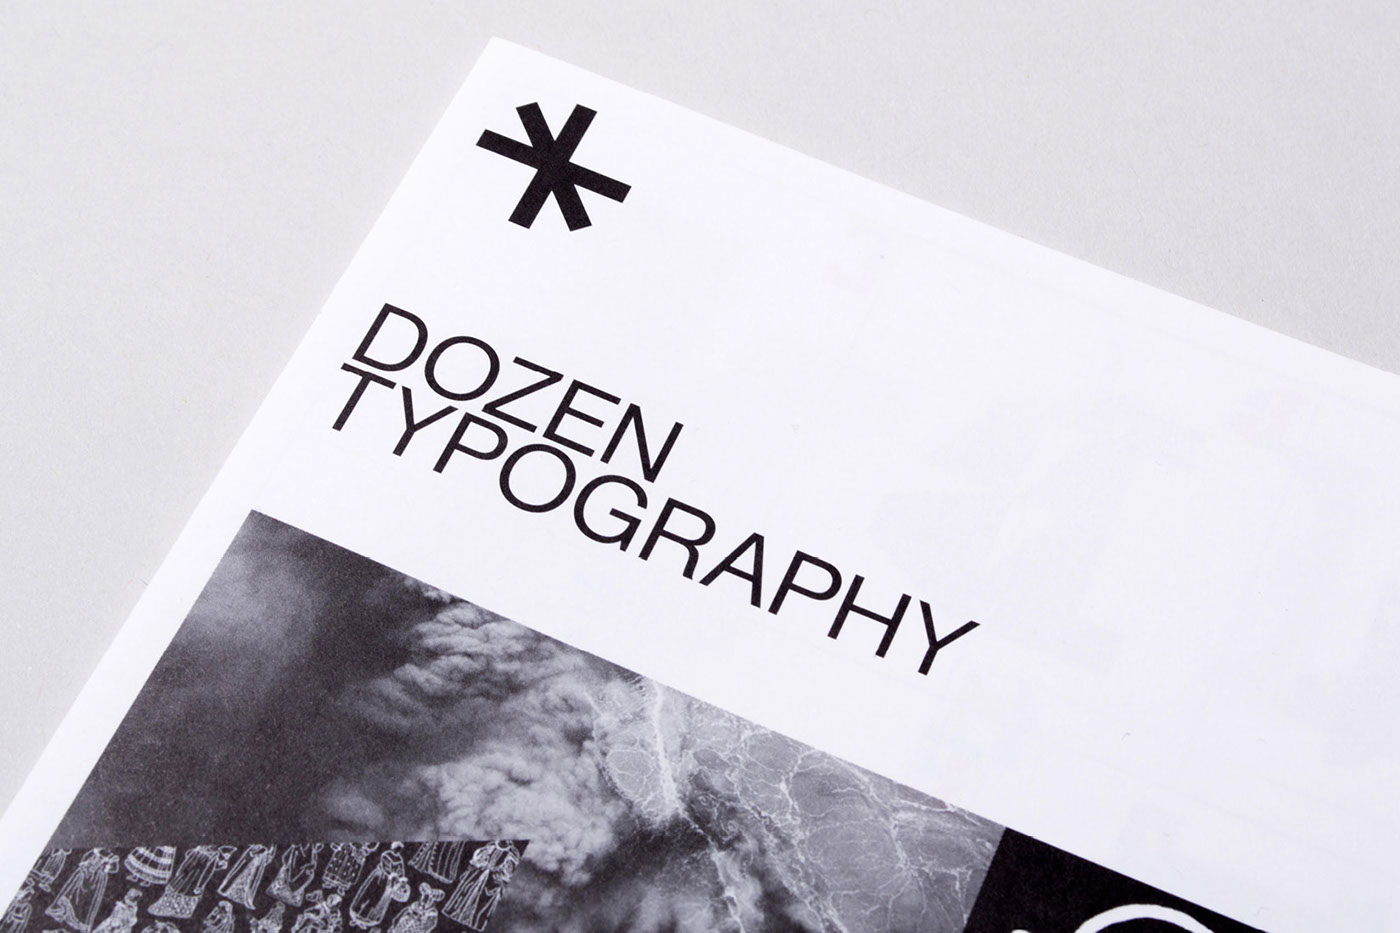 Packaging editorial product design  design calendar typographic geometric